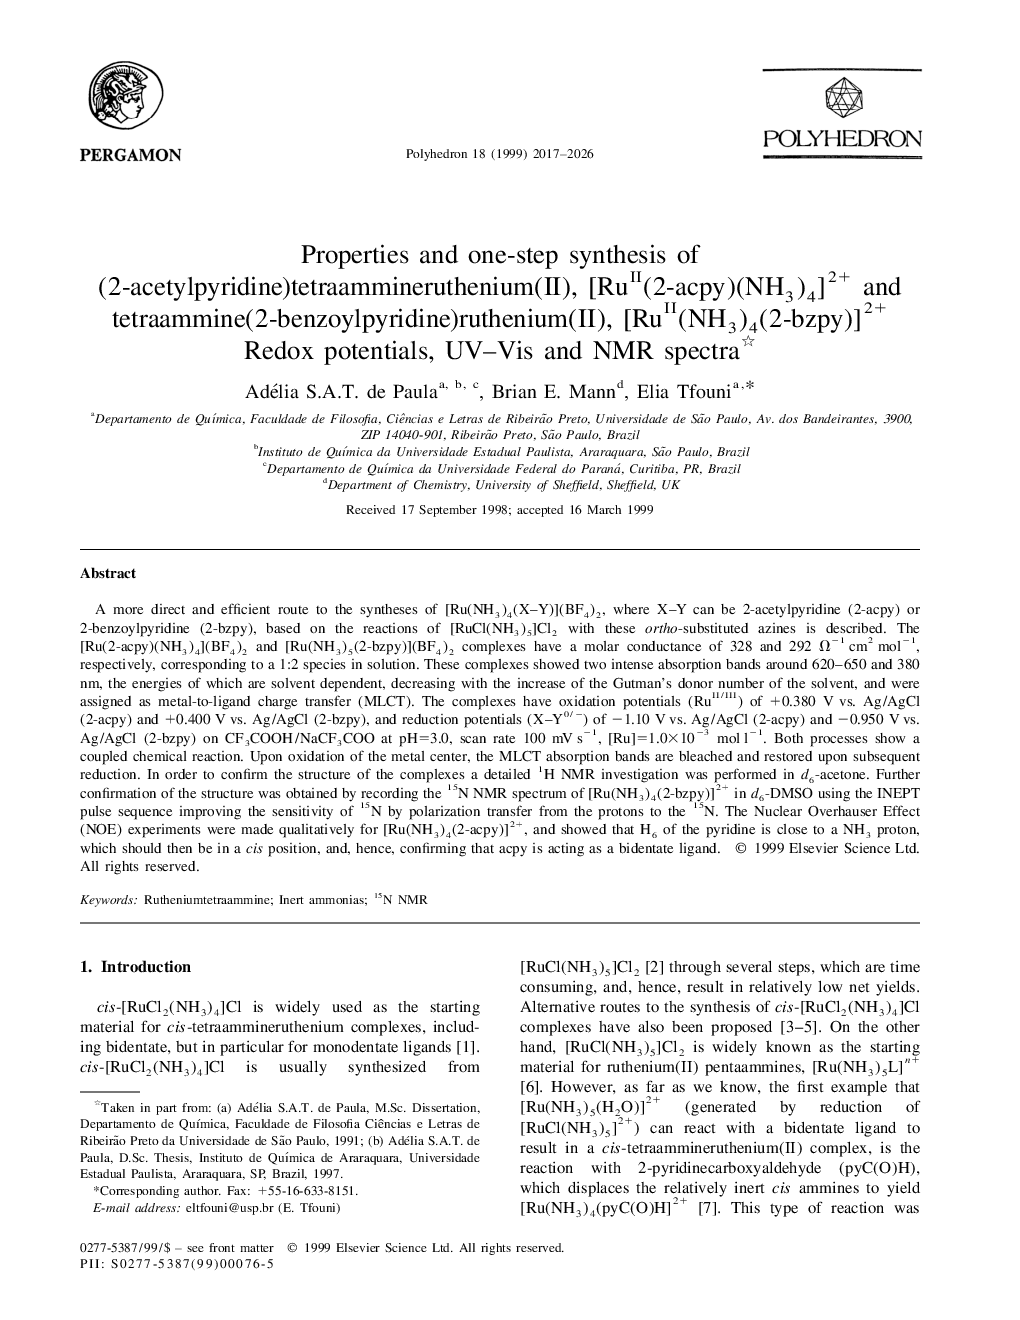 خواص و سنتز تک مرحله از (2-acetylpyridine) tetraammineruthenium (II)، [RuII (2-acpy) (NH3) 4] 2+ و tetraammine (2-benzoylpyridine) روتنیم (II)، [RuII (NH3) 4 ( 2-bzpy)] 2 + ☆: پتانسیل ردوکس،طیف UV-Vis و NMR 